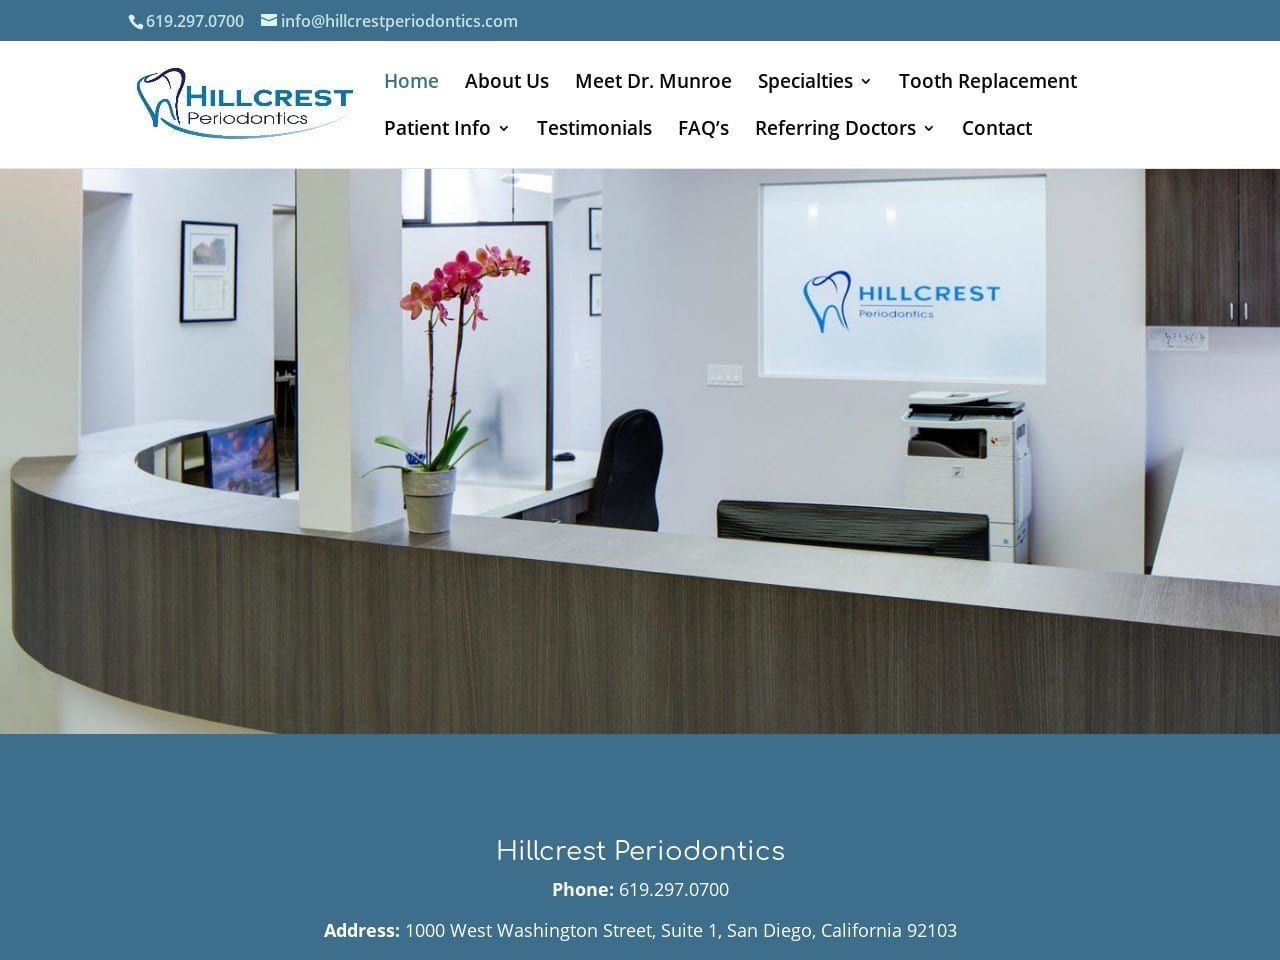 Hillcrest Periodontics Website Screenshot from hillcrestperiodontics.com